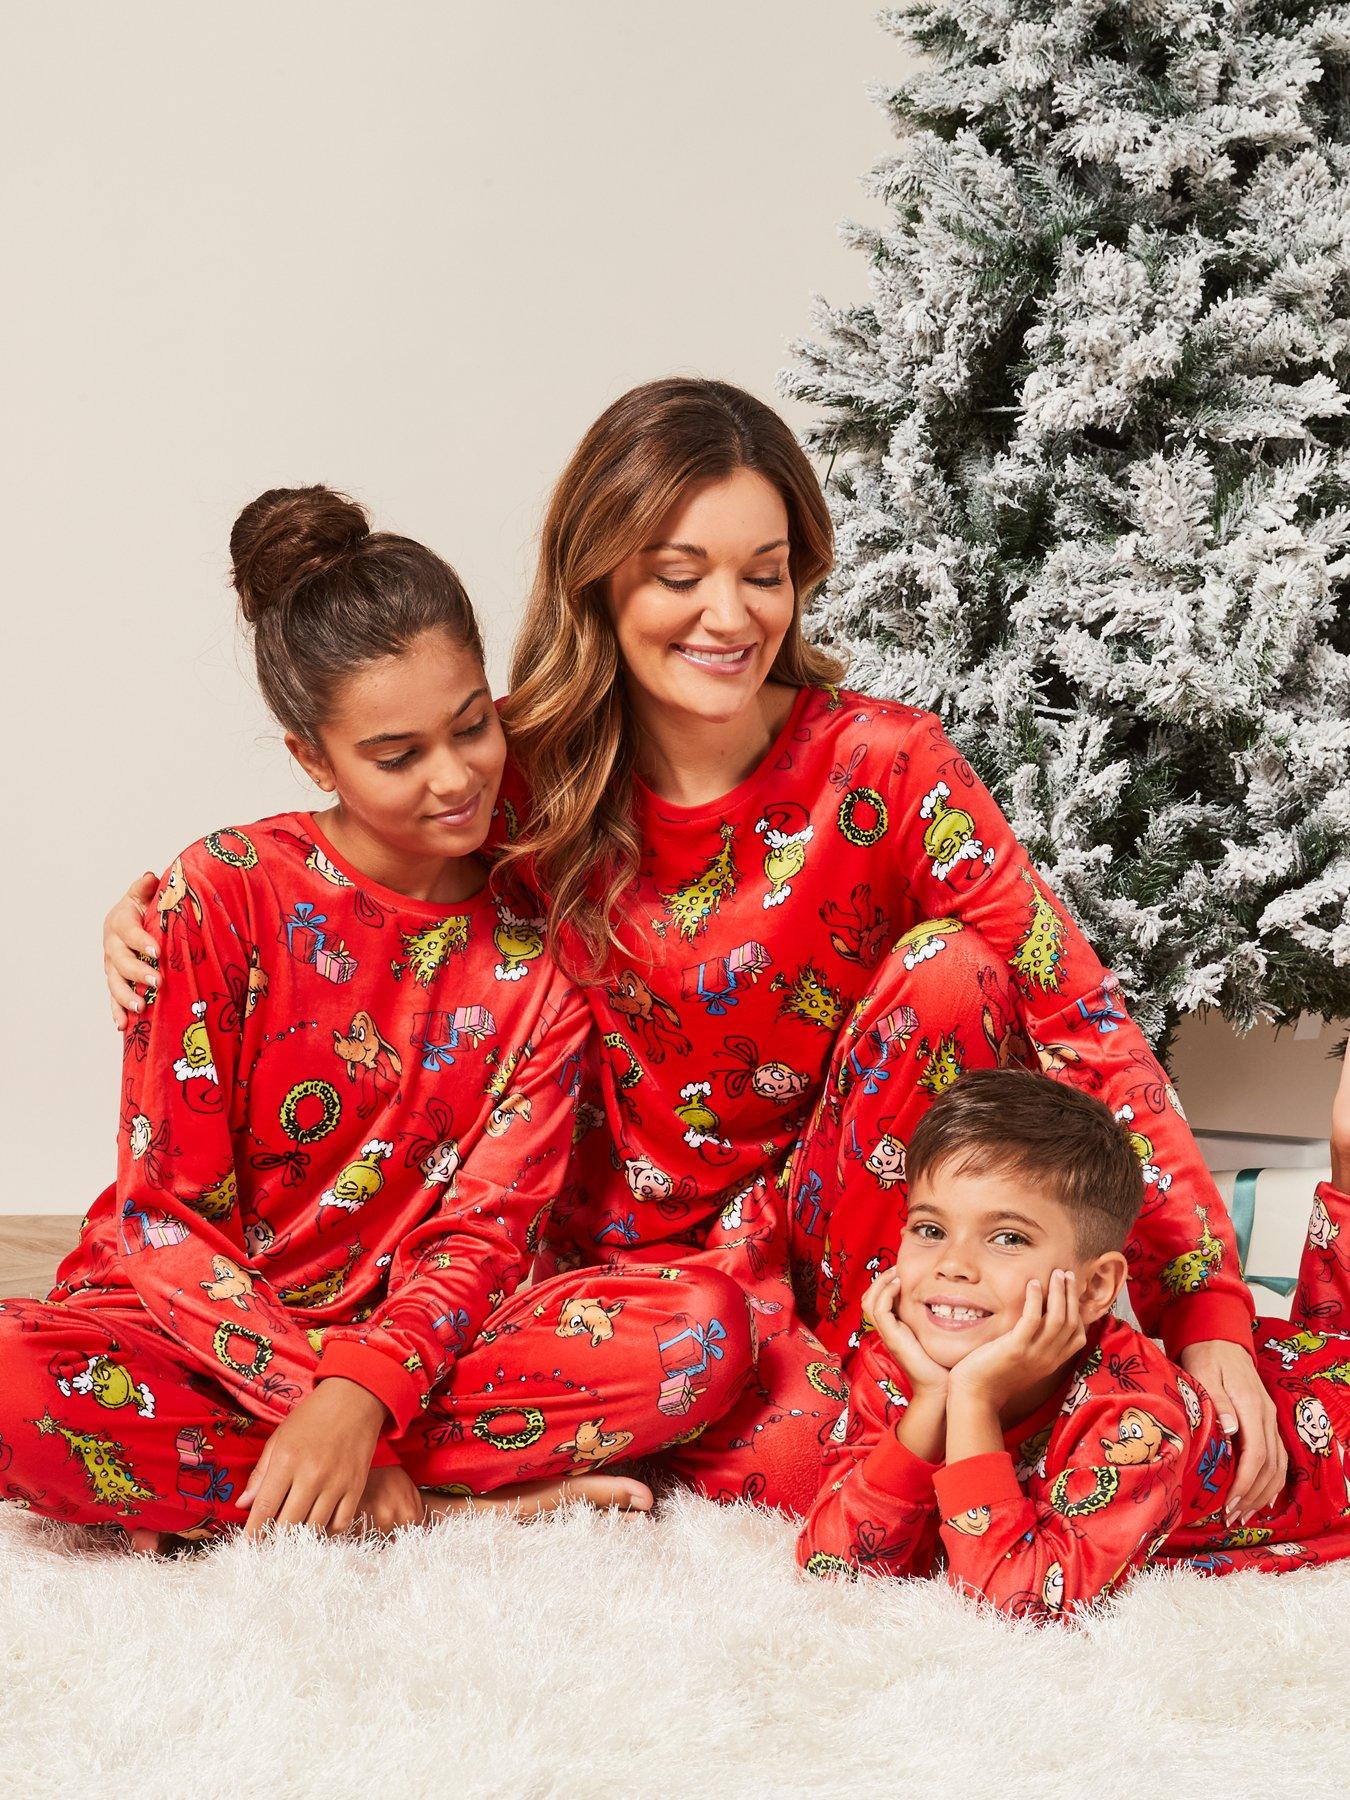 Family Christmas Pjs Matching Sets Women Men Xmas Matching Pajamas for  Adults Kids Holiday Xmas Sleepwear Set 